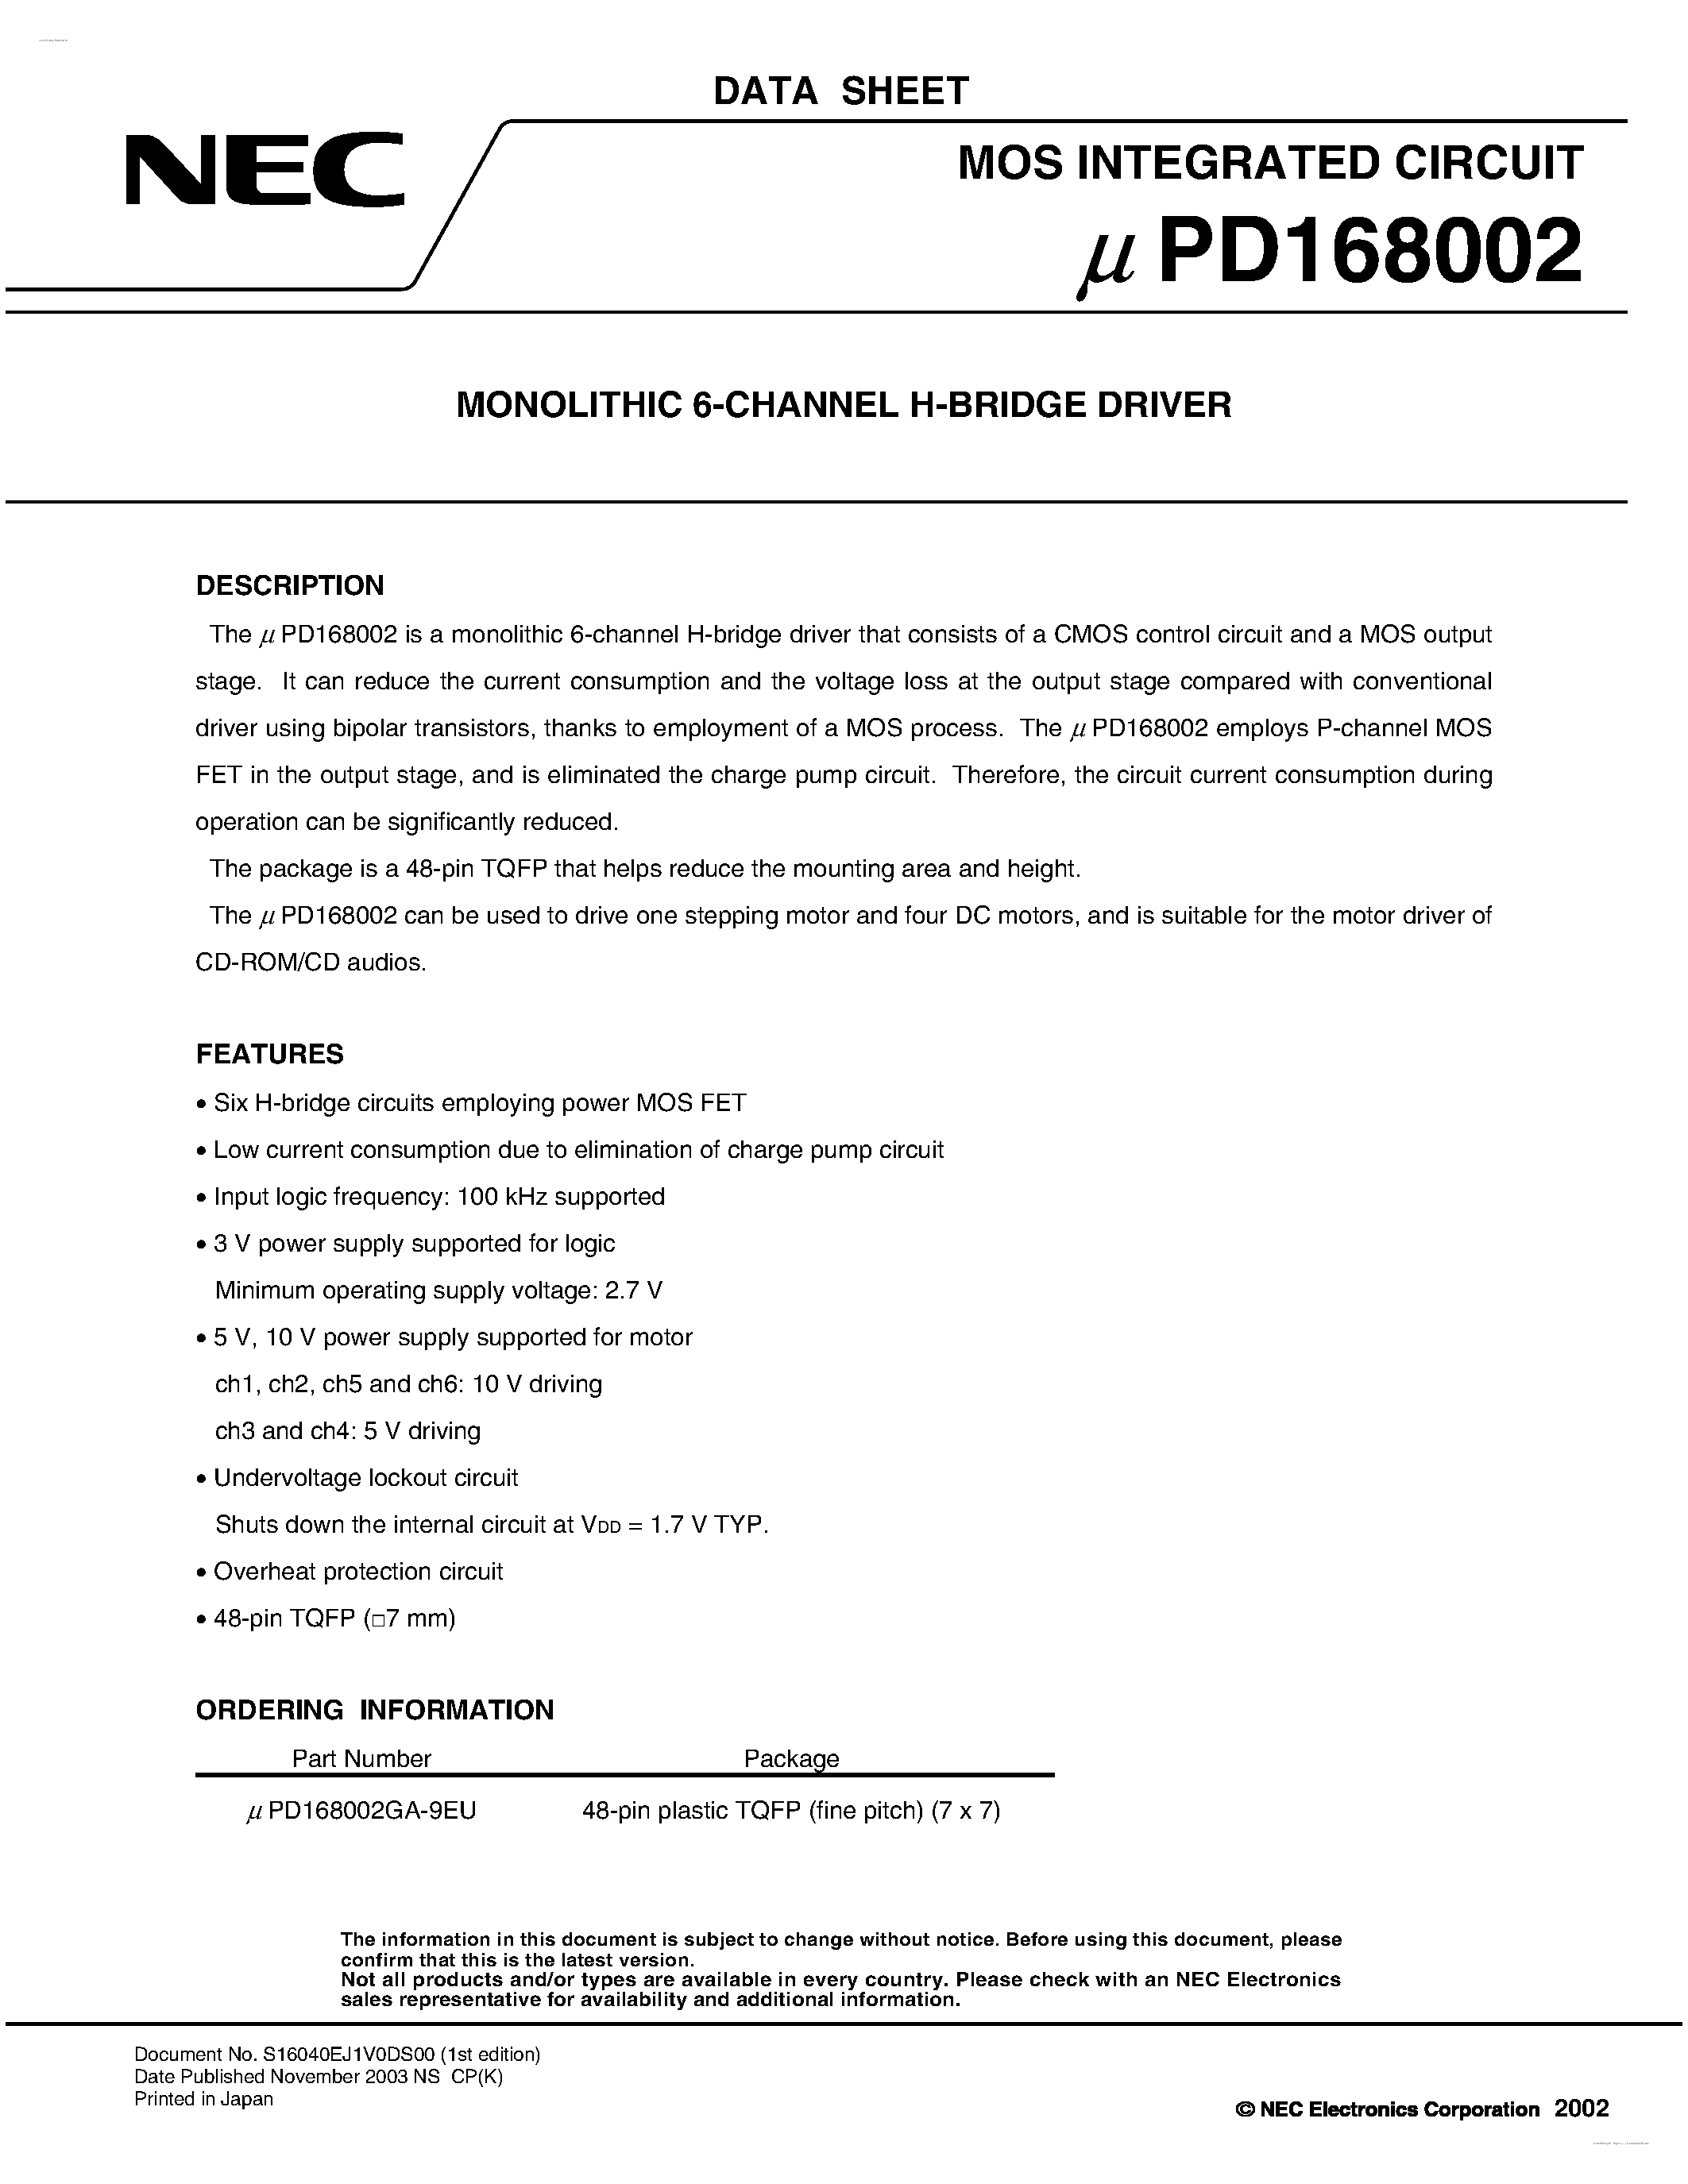 Datasheet UPD168002 - MONOLITHIC 6-CHANNEL H-BRIDGE DRIVER page 1